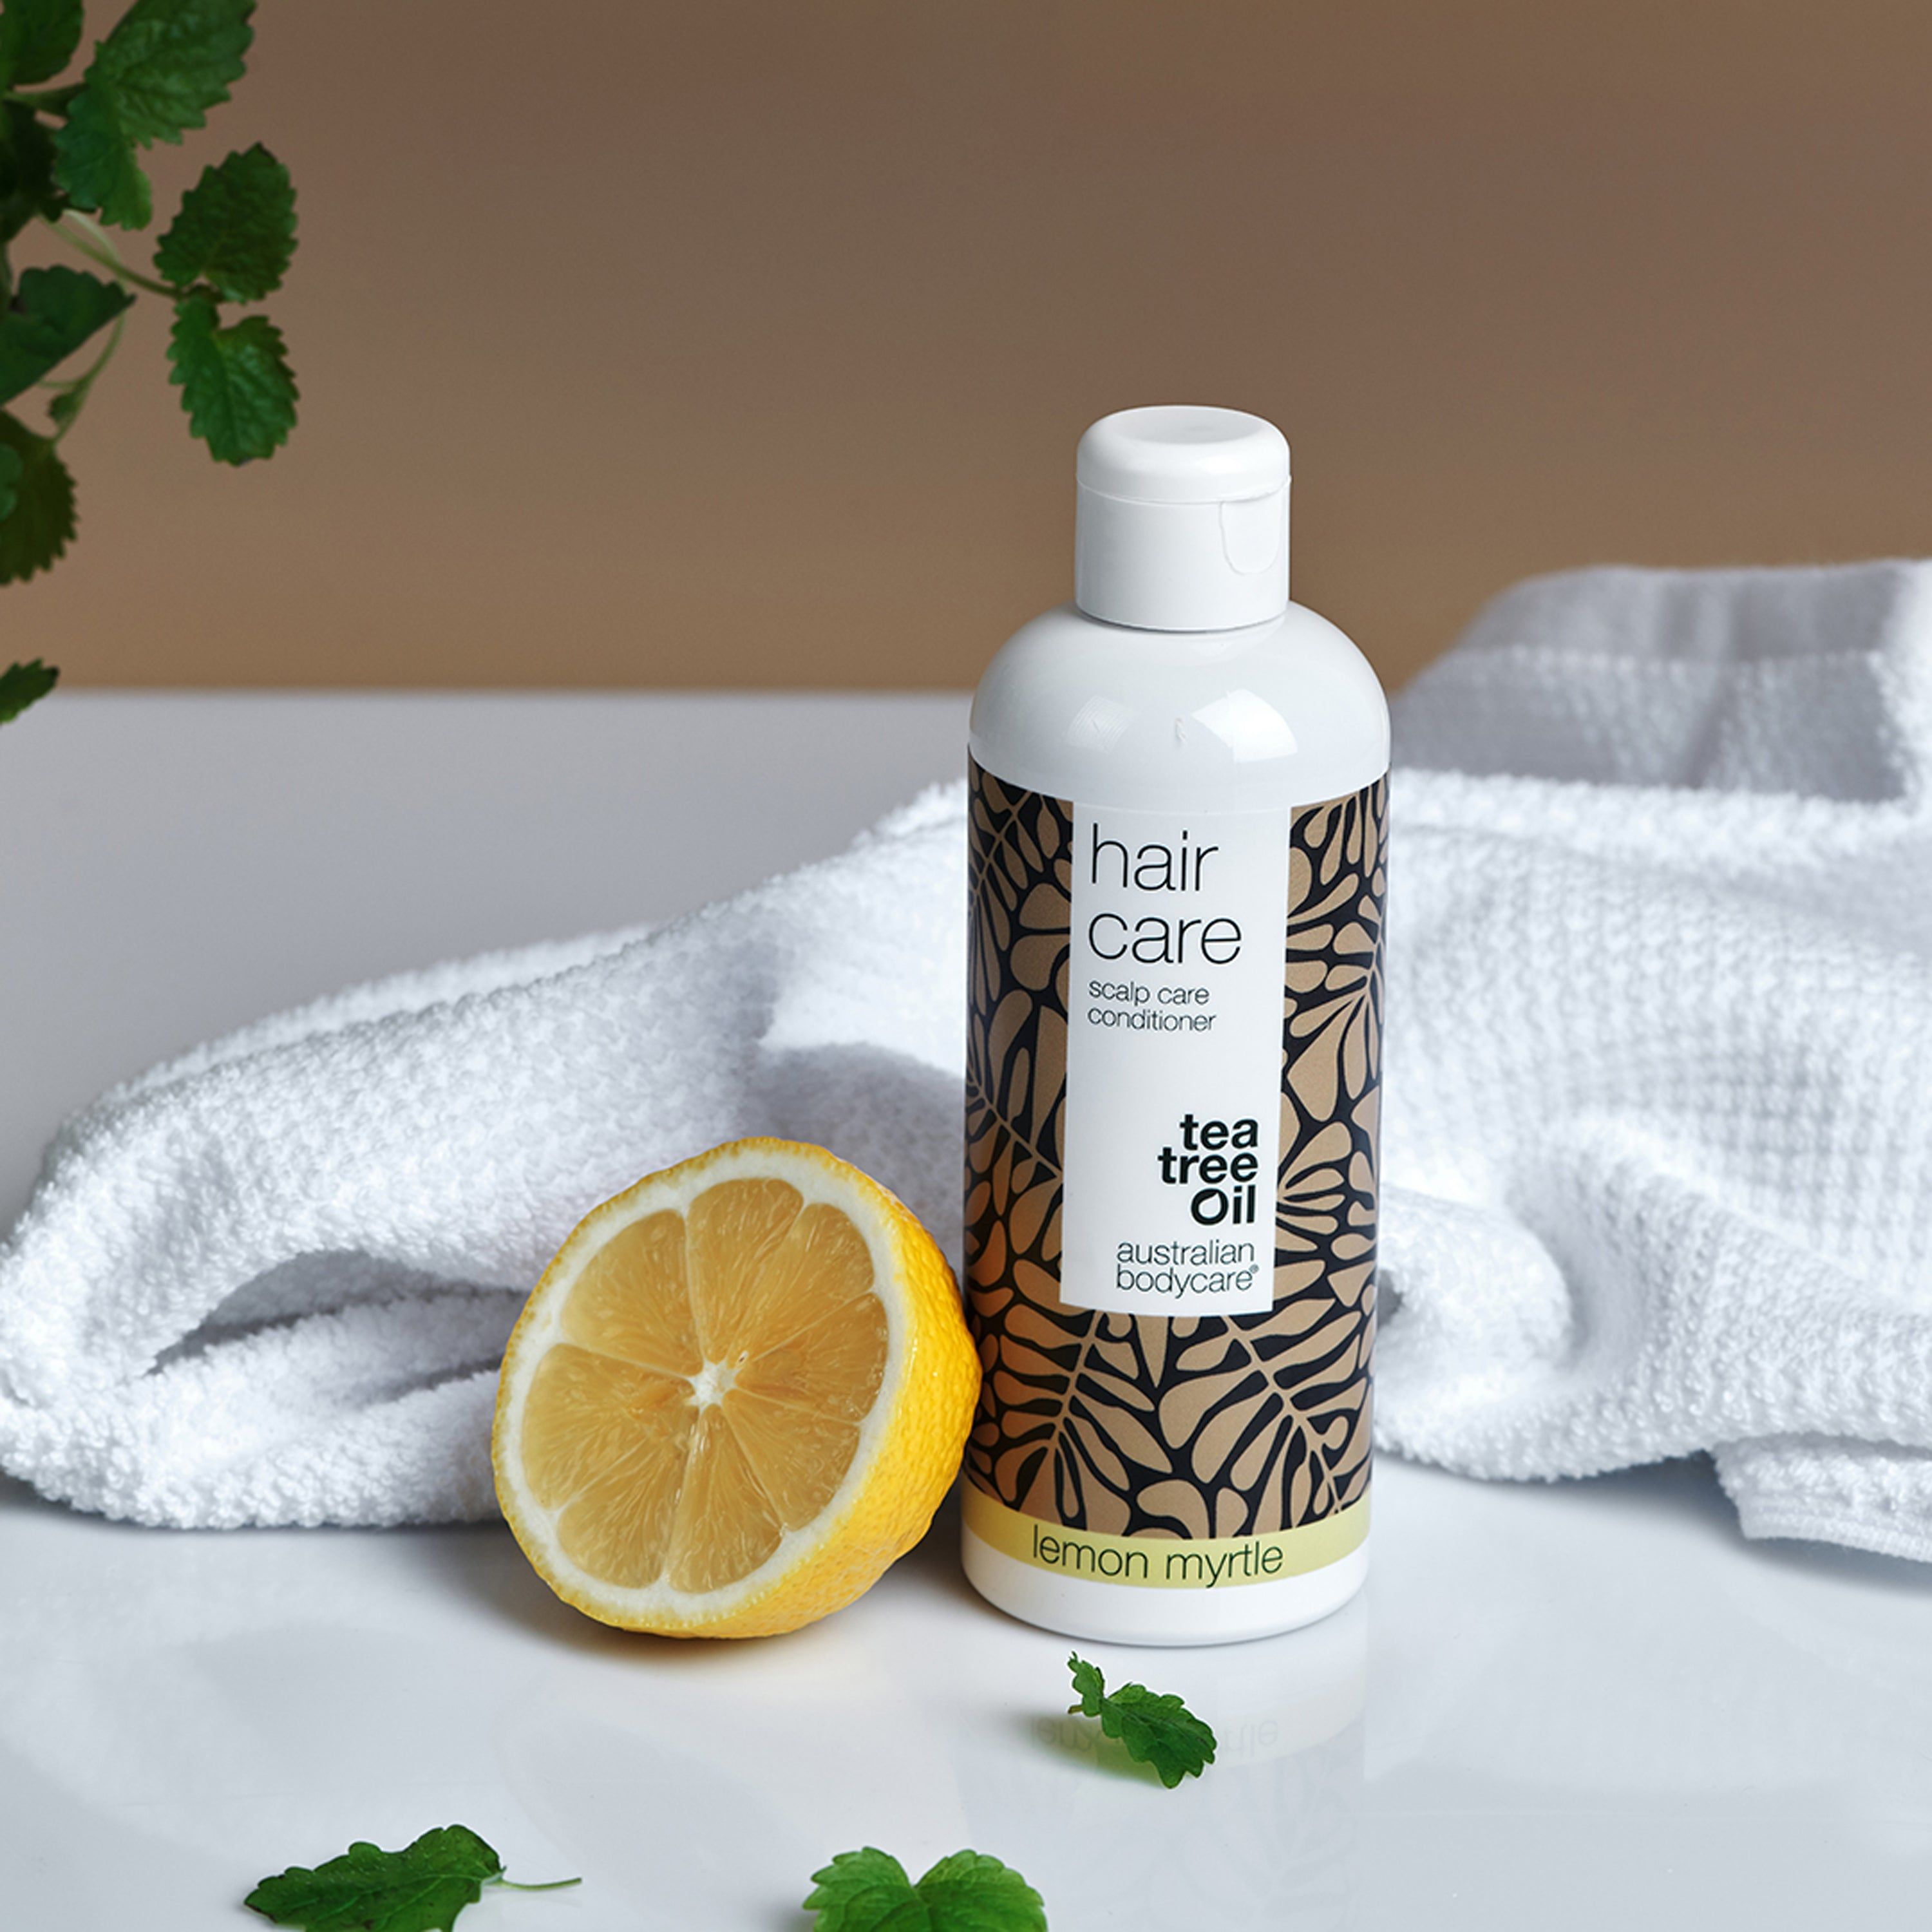 Australian Bodycare Teebaumöl und Lemon Myrtle Haarspülung - Gegen Schuppen & trockenes Haar